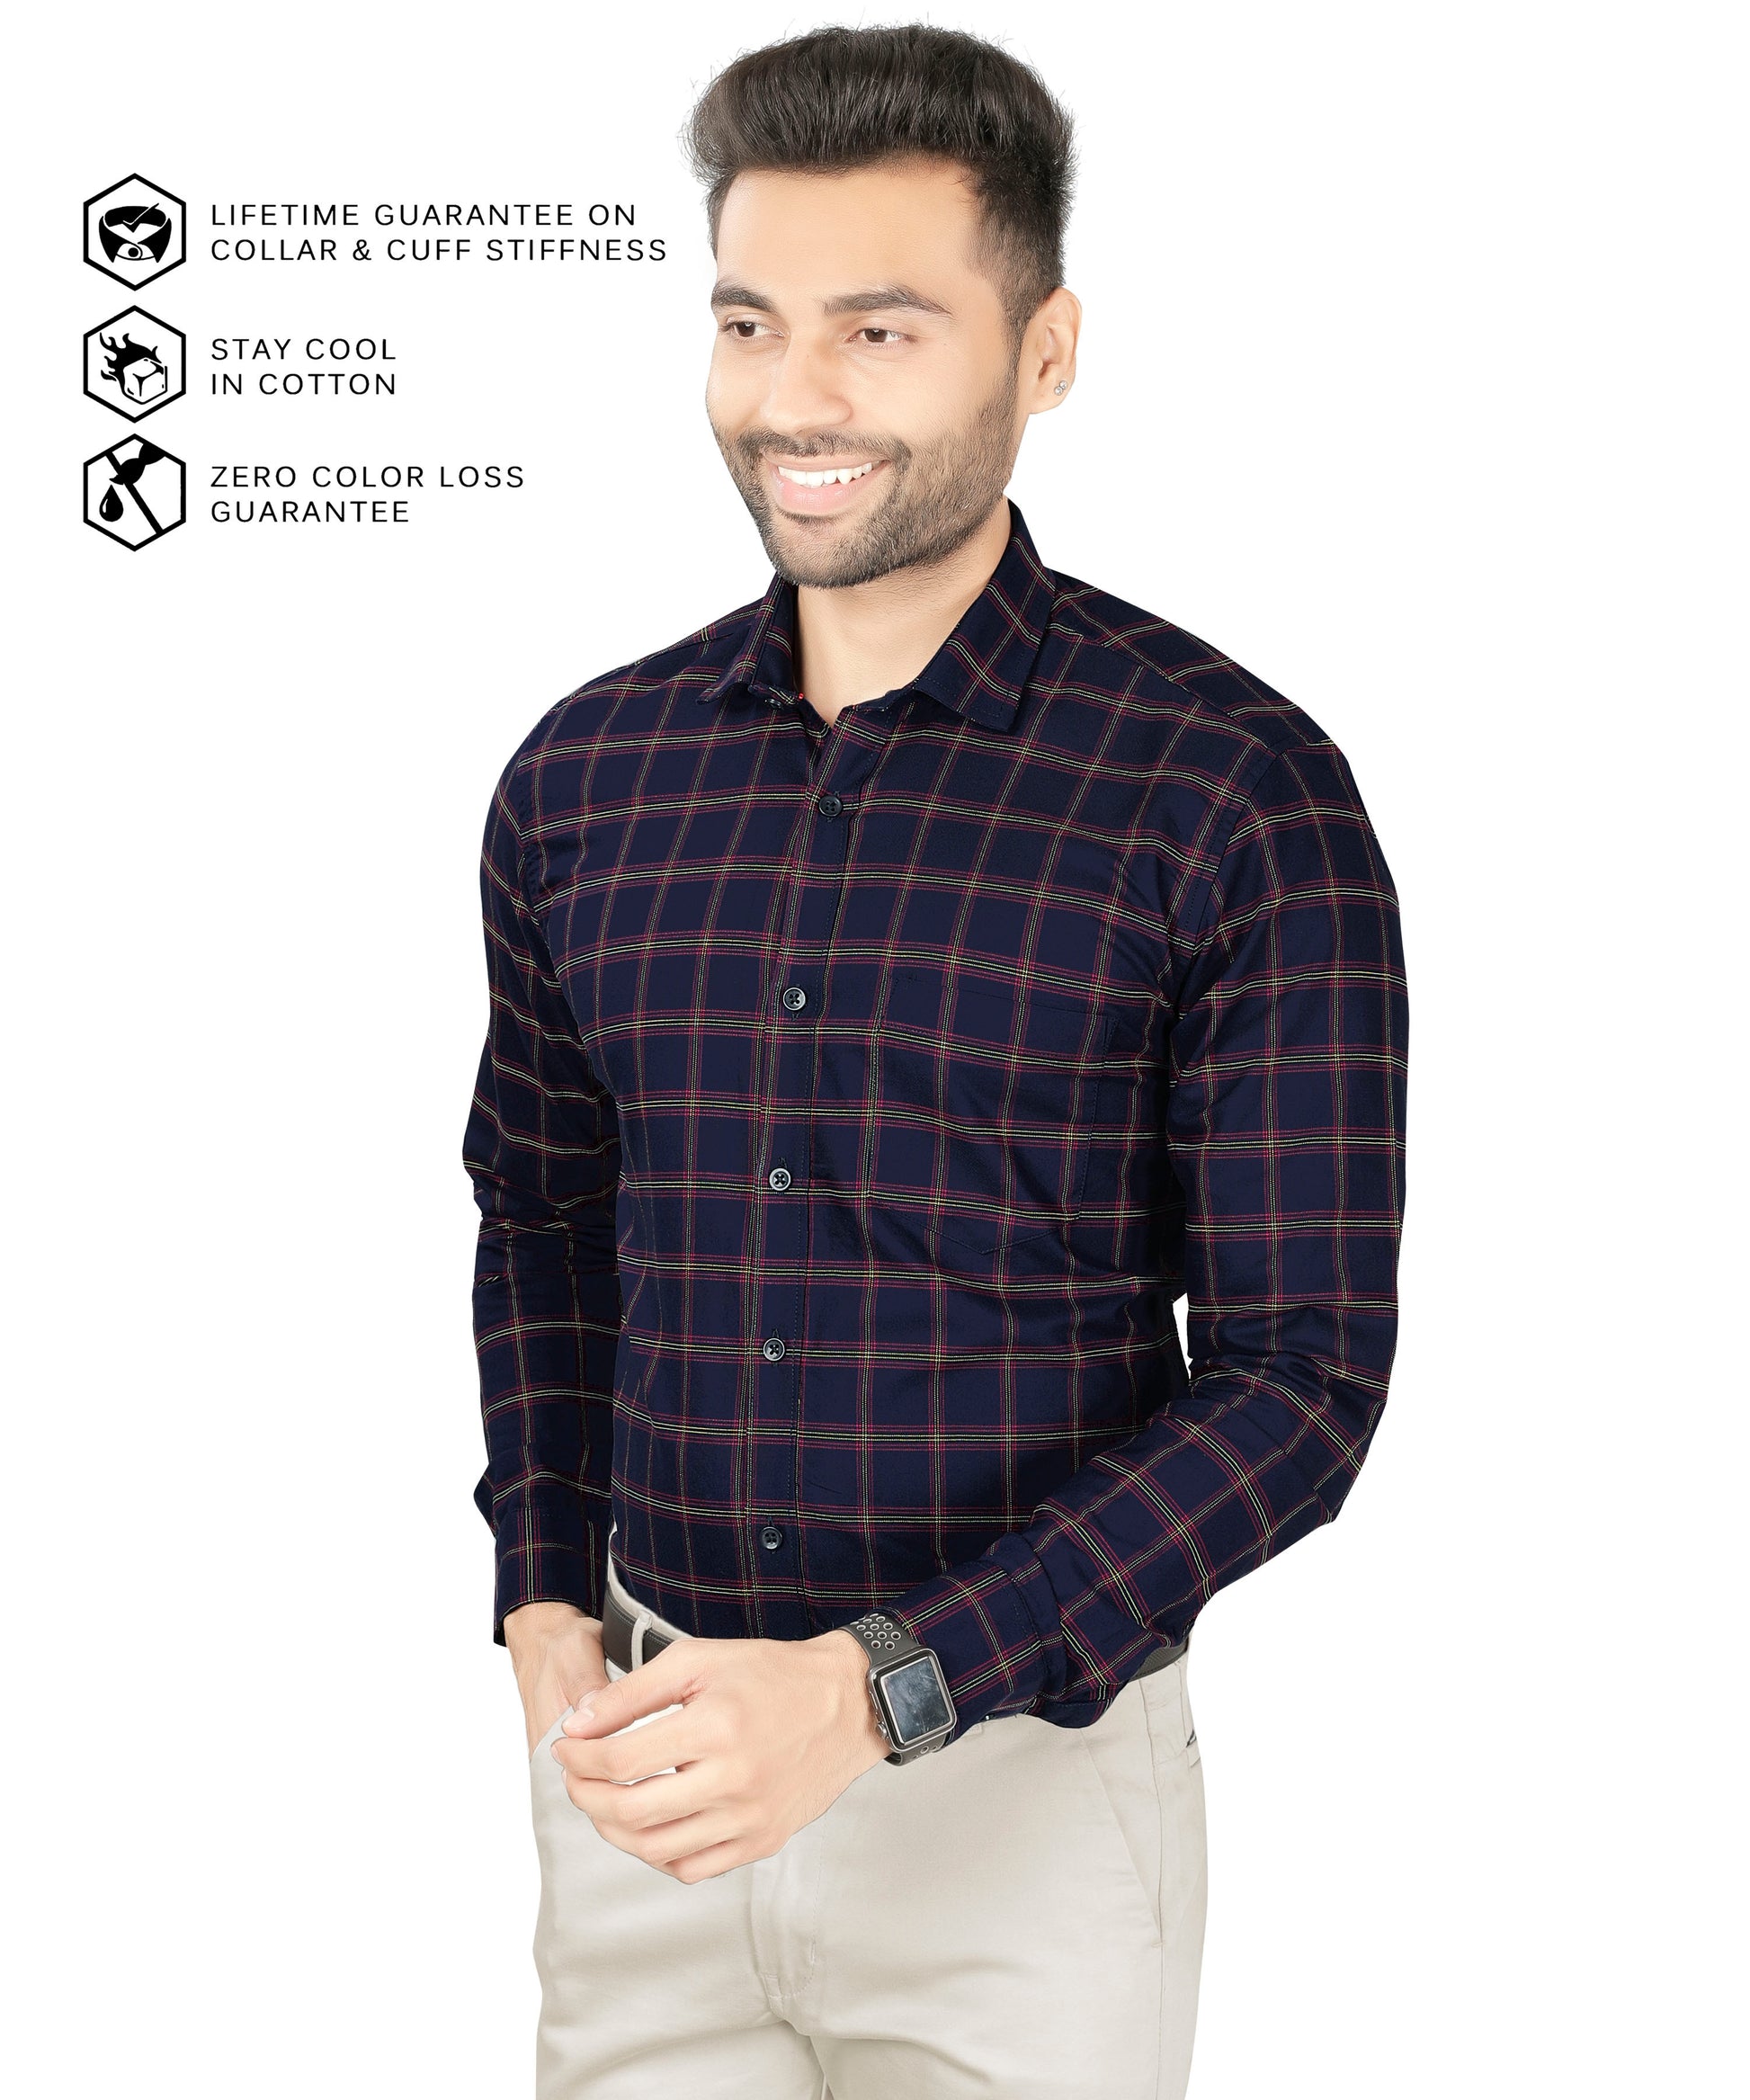 5thanfold Men's Formal Pure Cotton Full Sleeve Checkered Dark blue Slim Fit Shirt